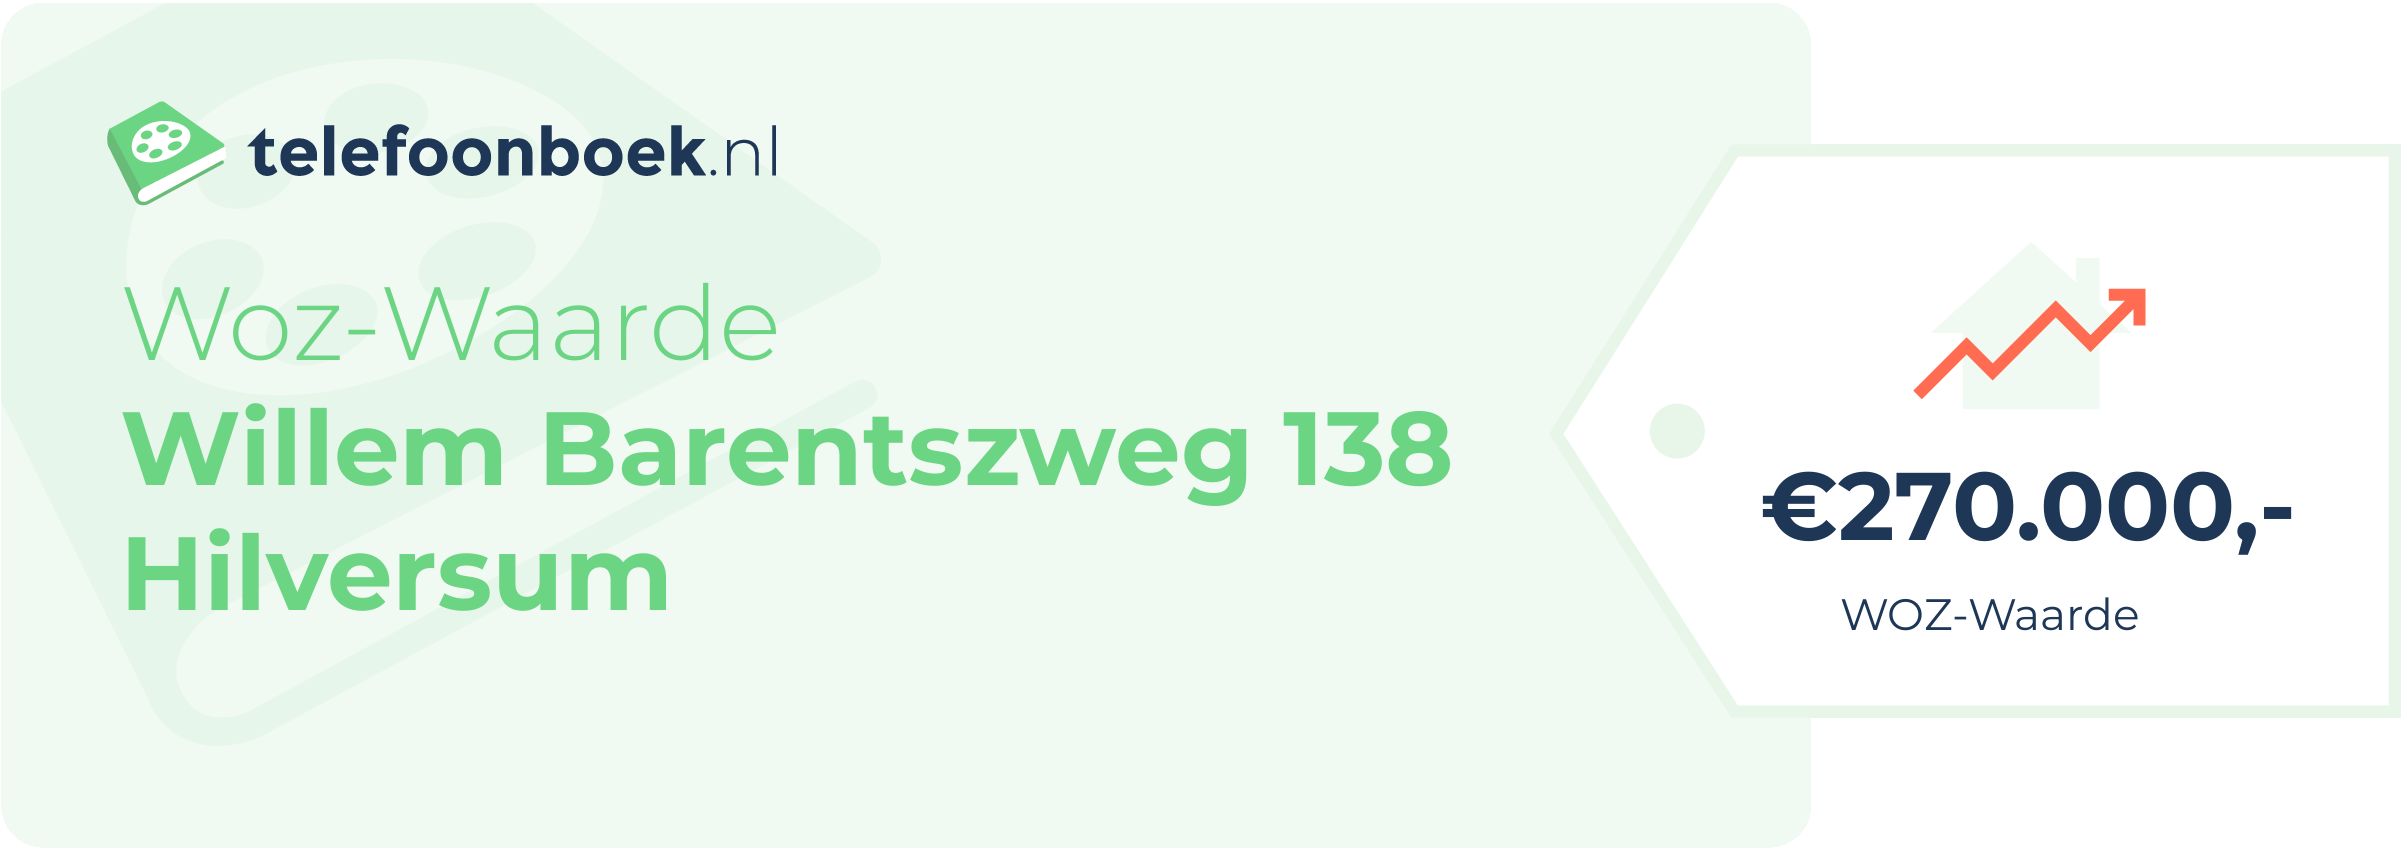 WOZ-waarde Willem Barentszweg 138 Hilversum